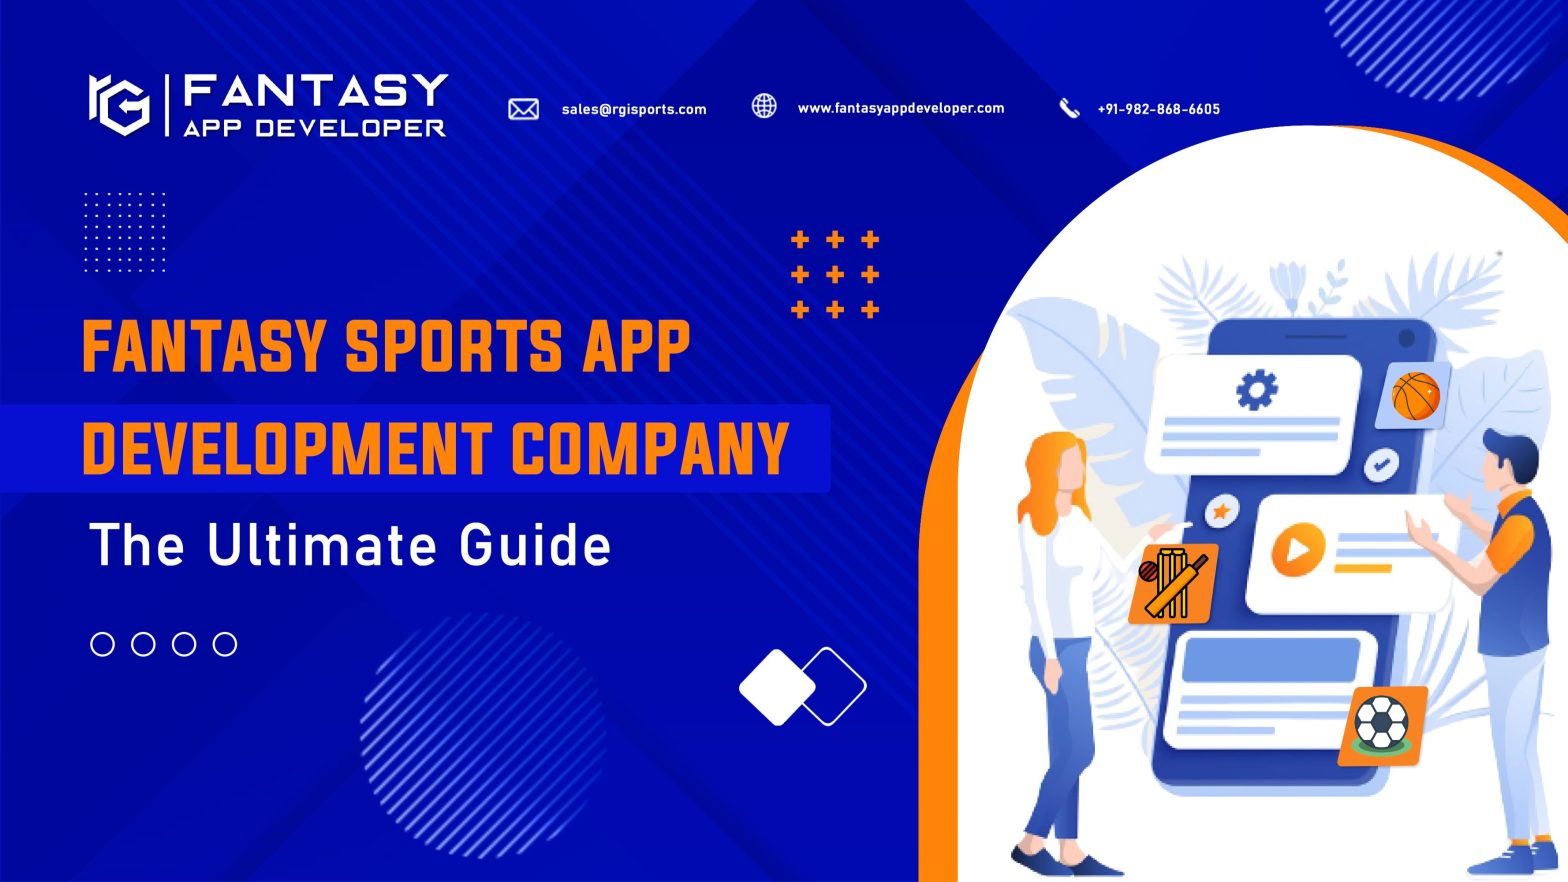 Fantasy Sports App Development Company The Ultimate Guide